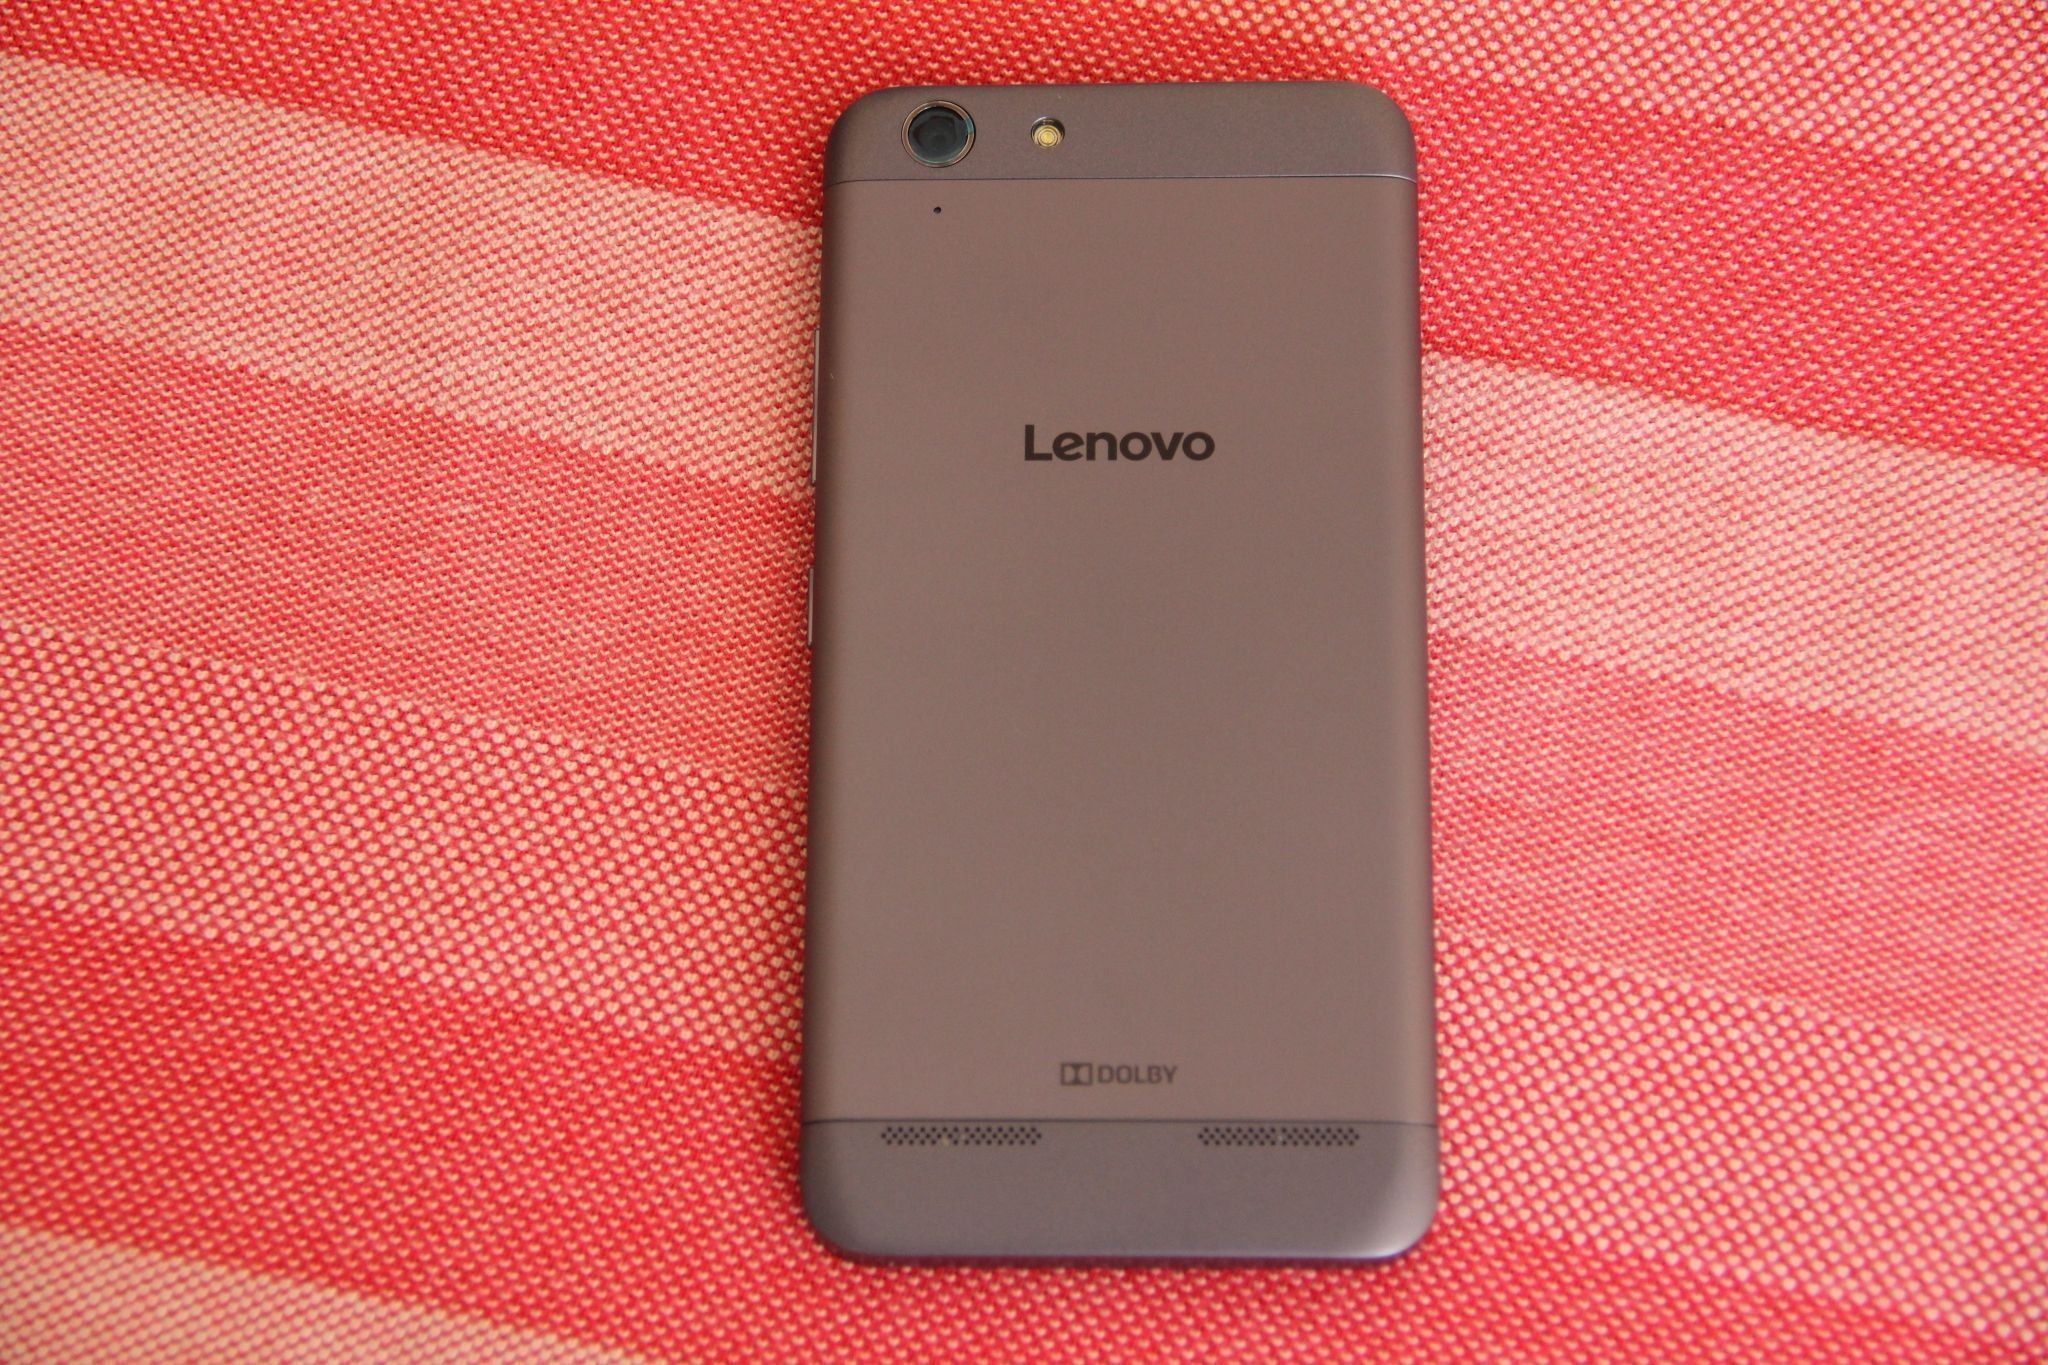 Lenovo Vibe K5 smartphone: a gift for music lovers